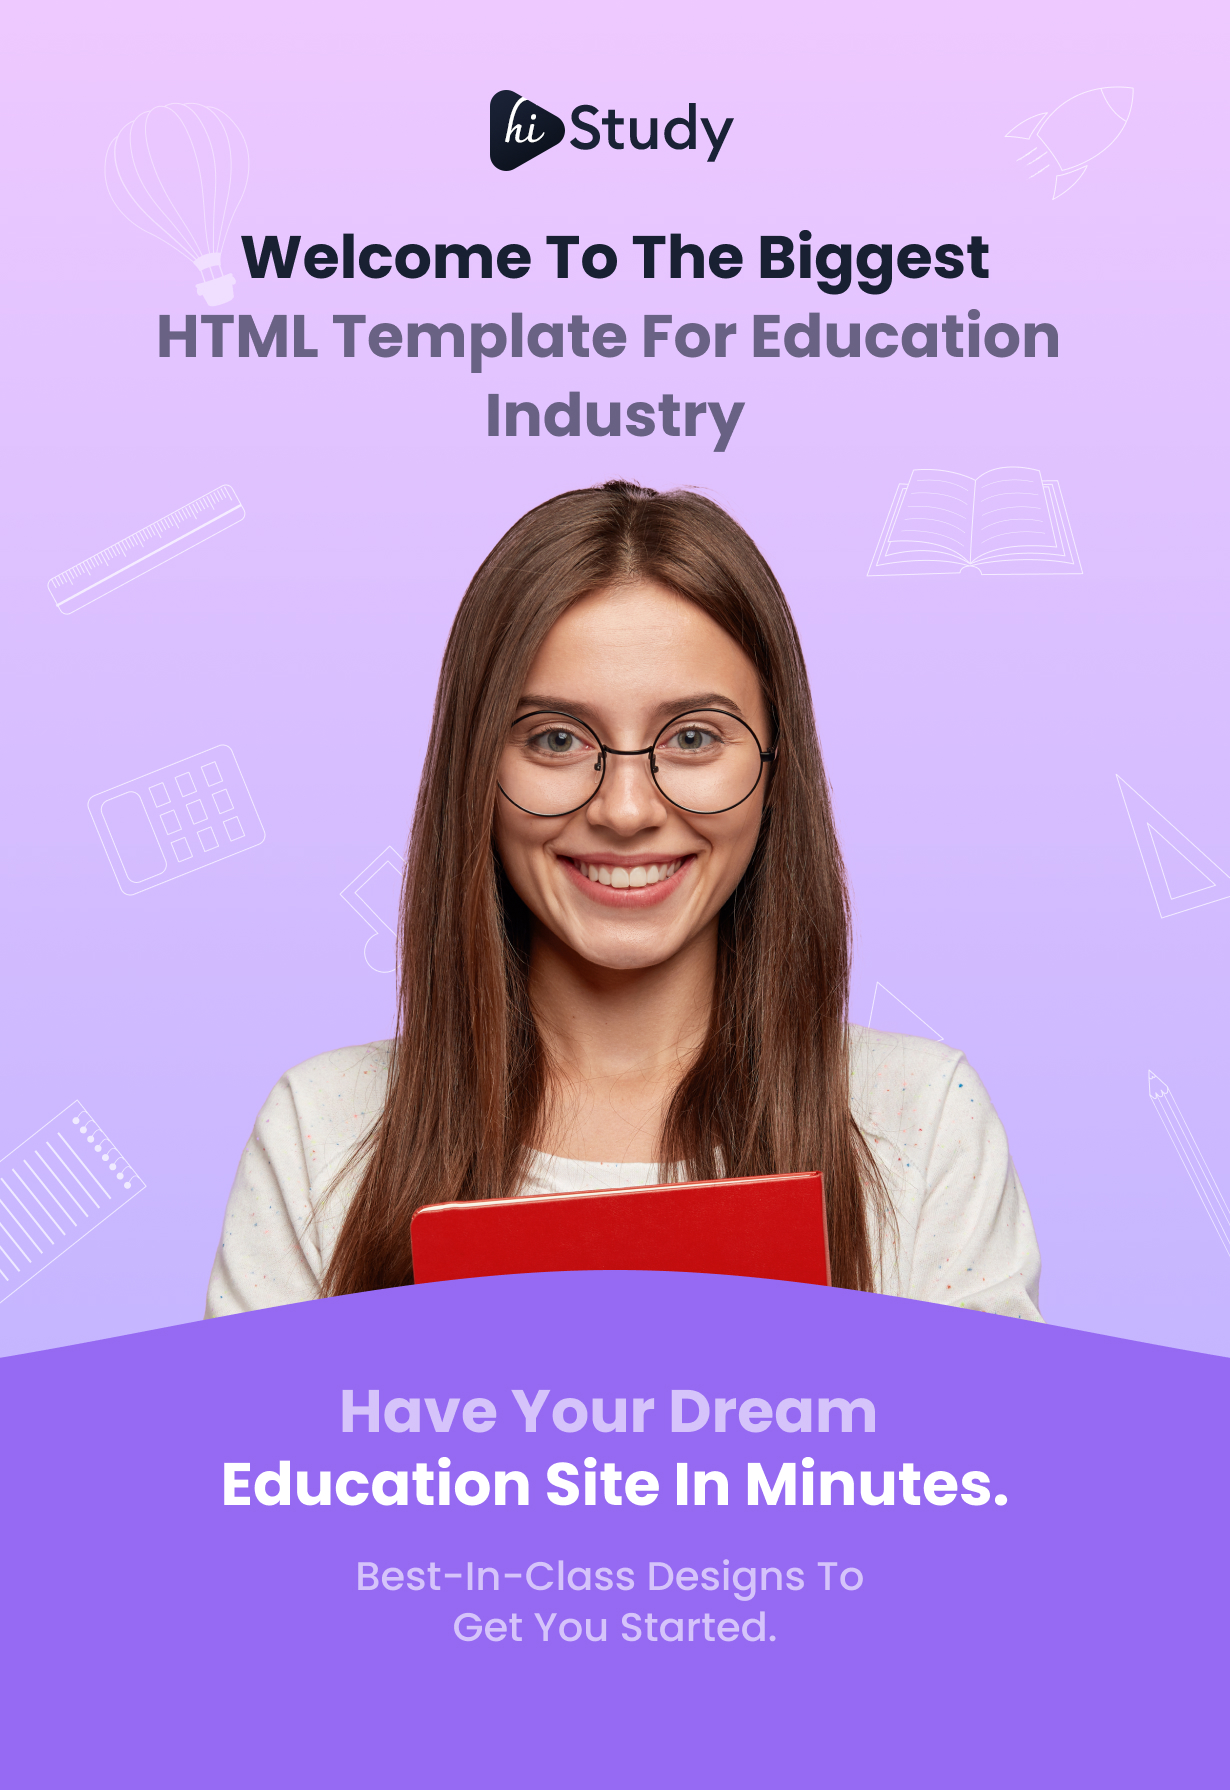 HiStudy - Online Courses & Education Template - 4